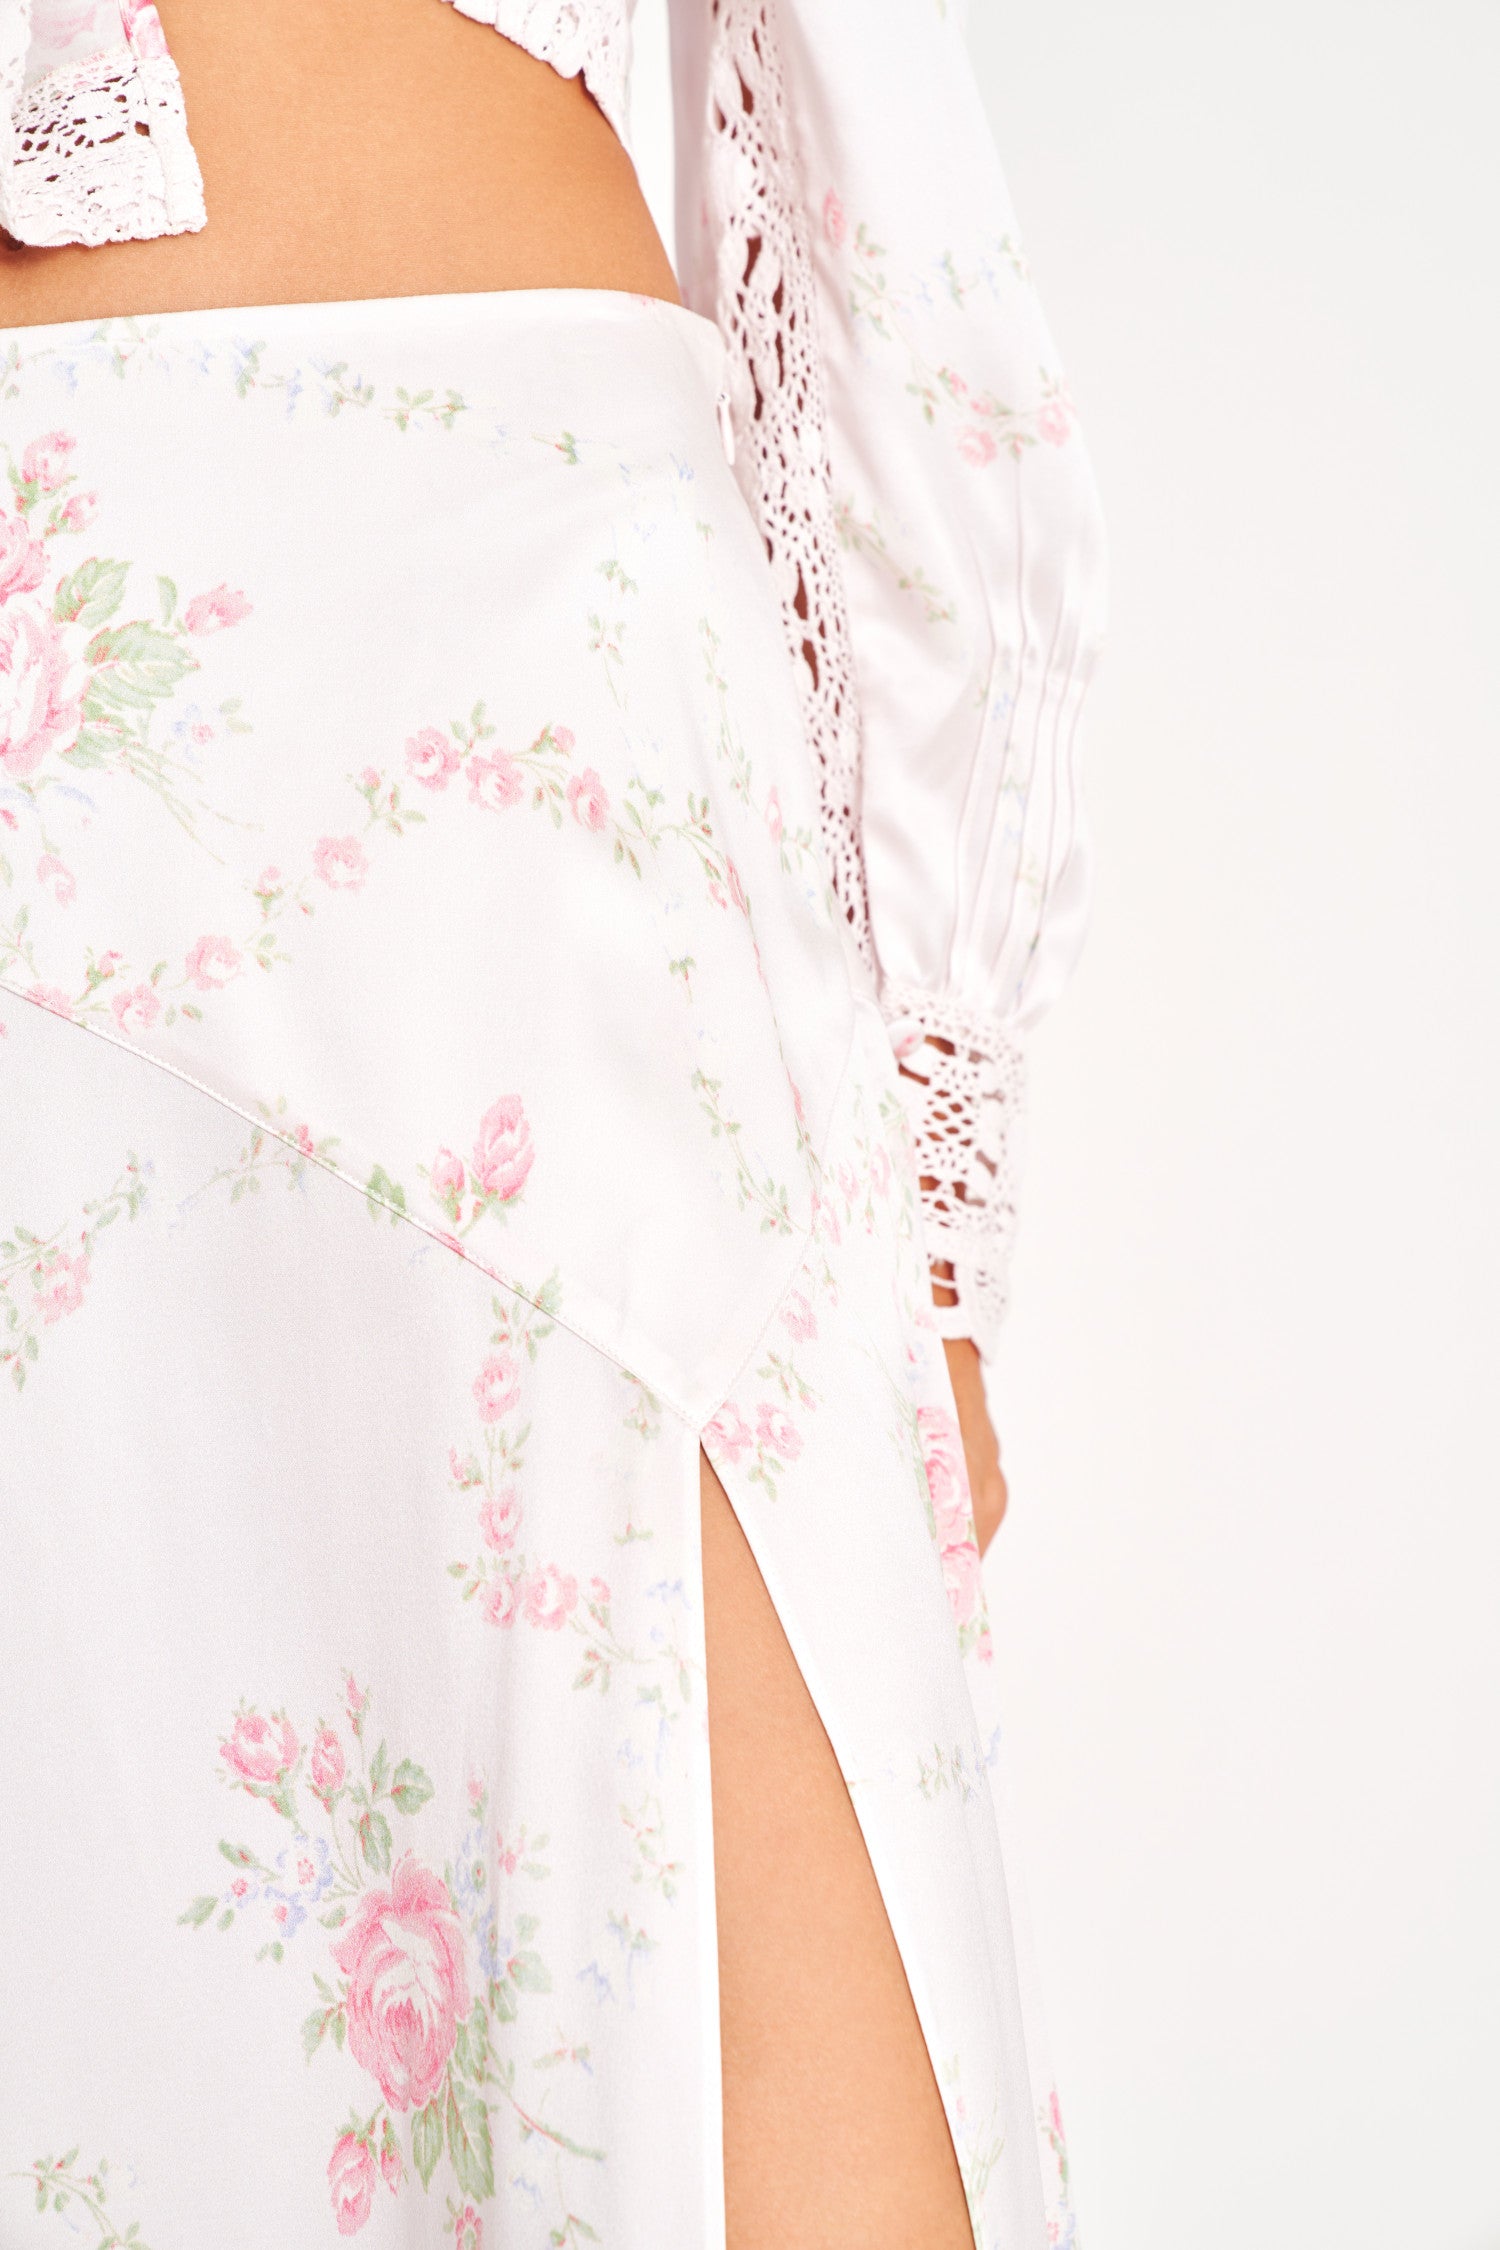 Floral silk maxi dress with slit on wearer's left.